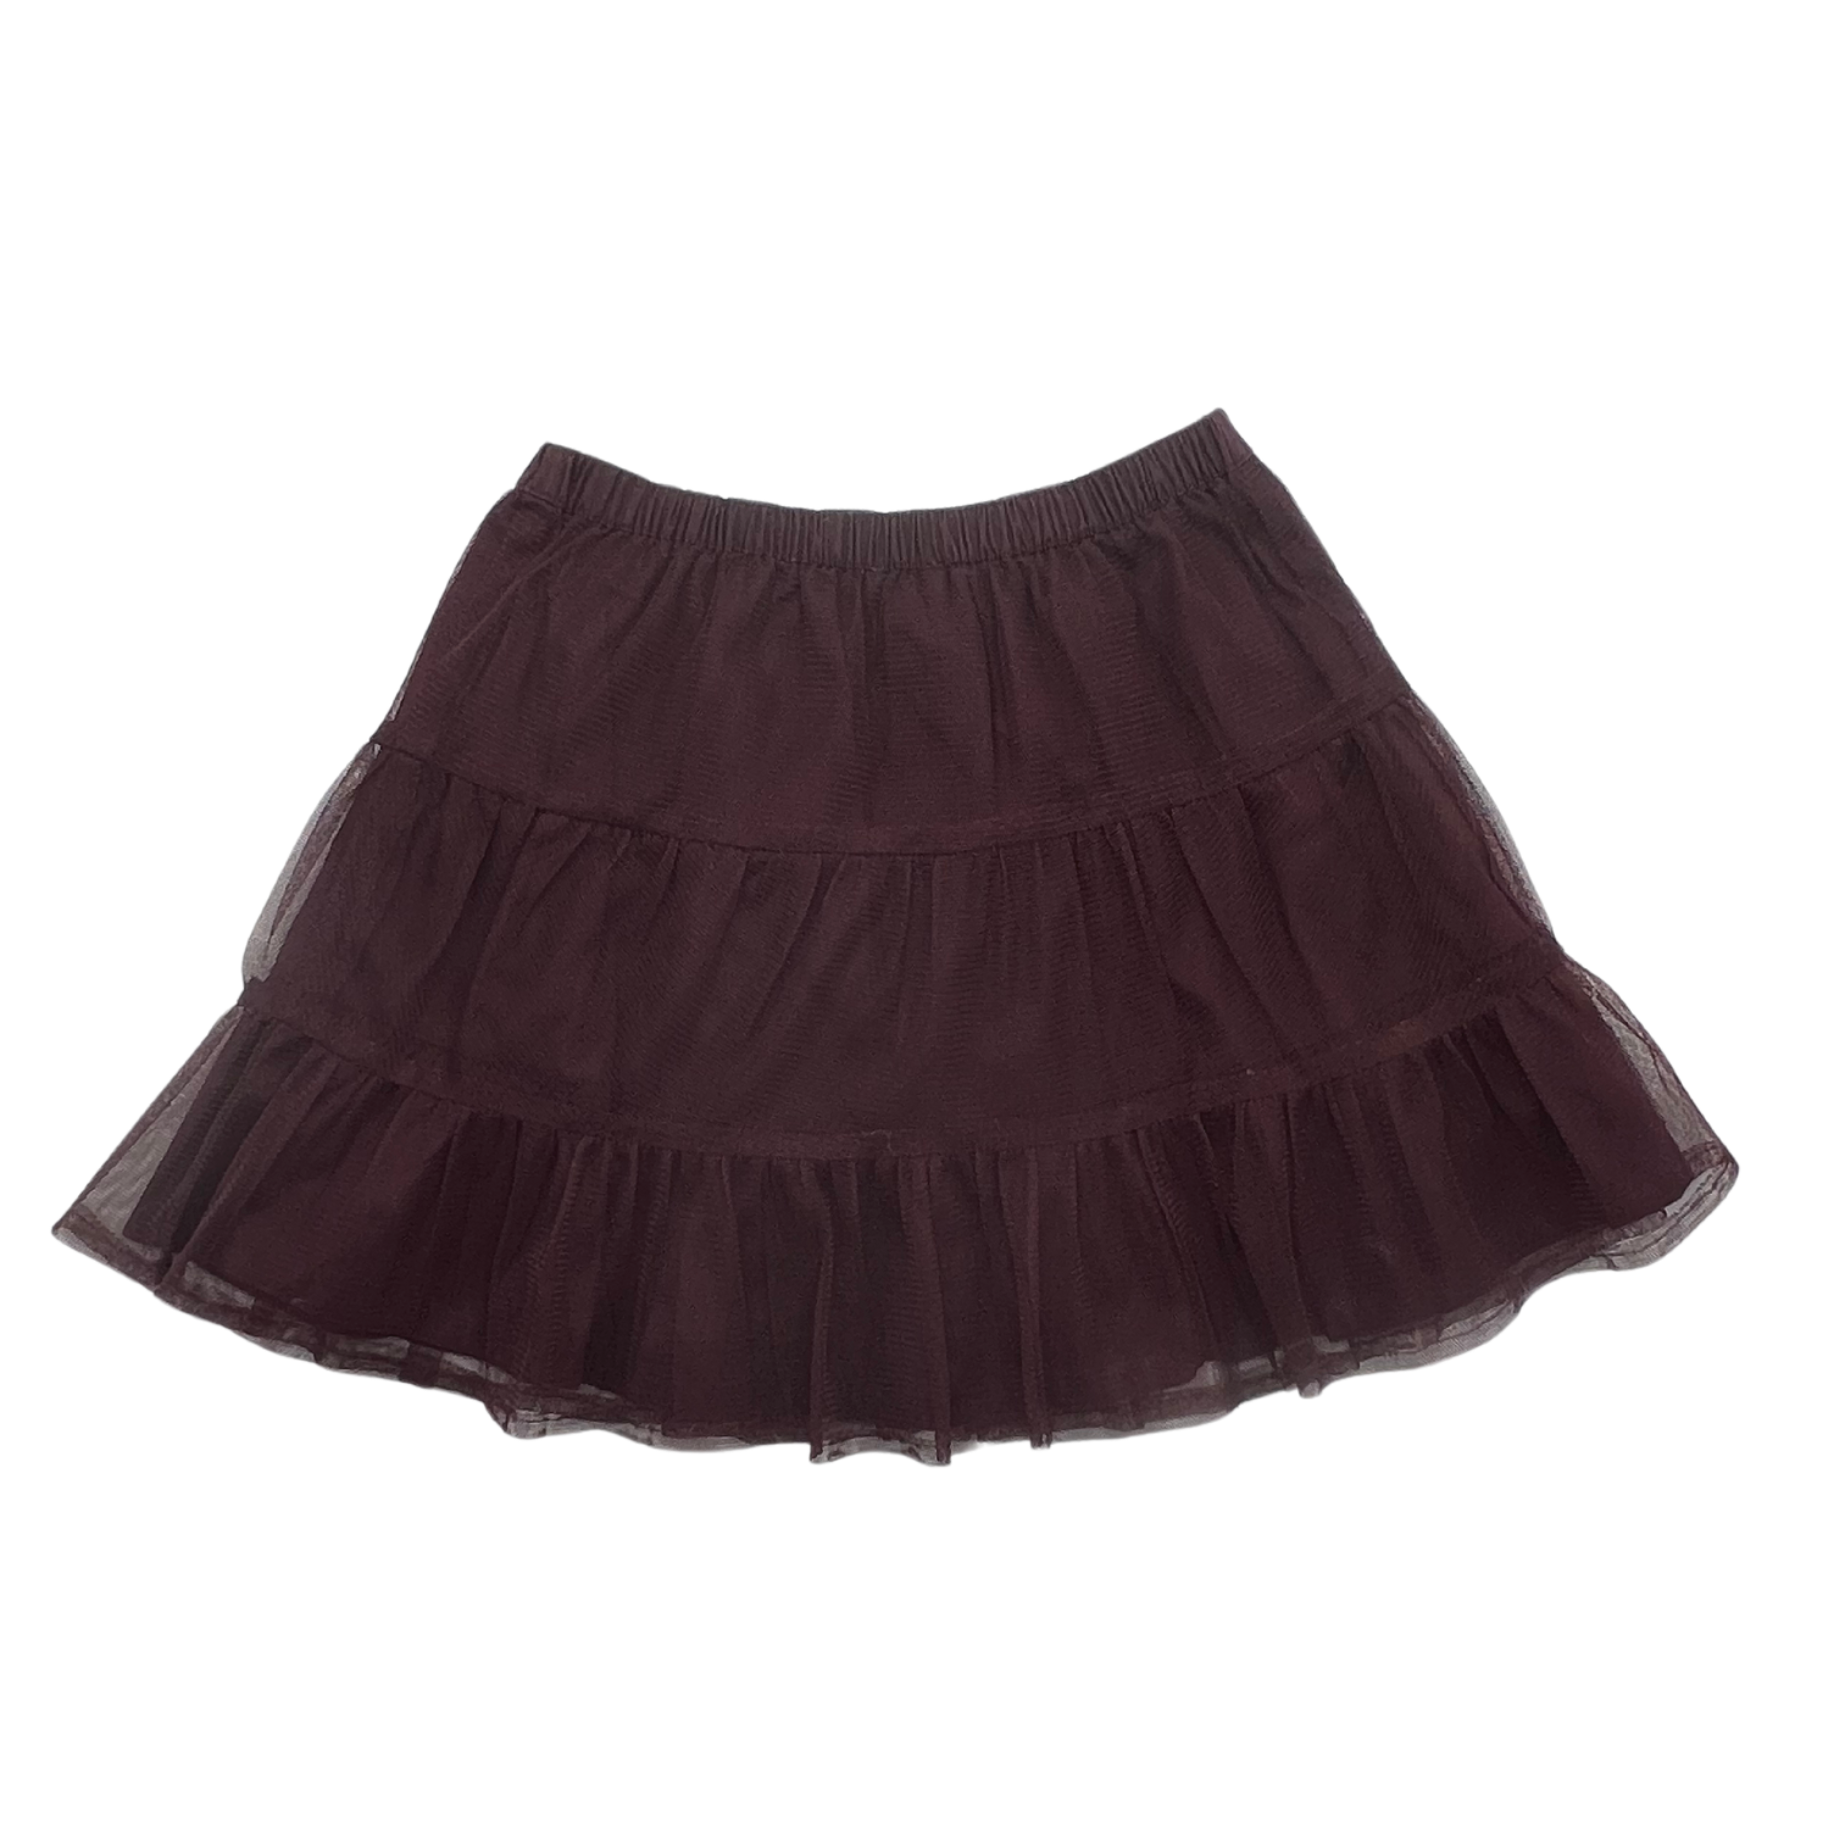 JACADI - Burgundy tulle skirt - 4 years old